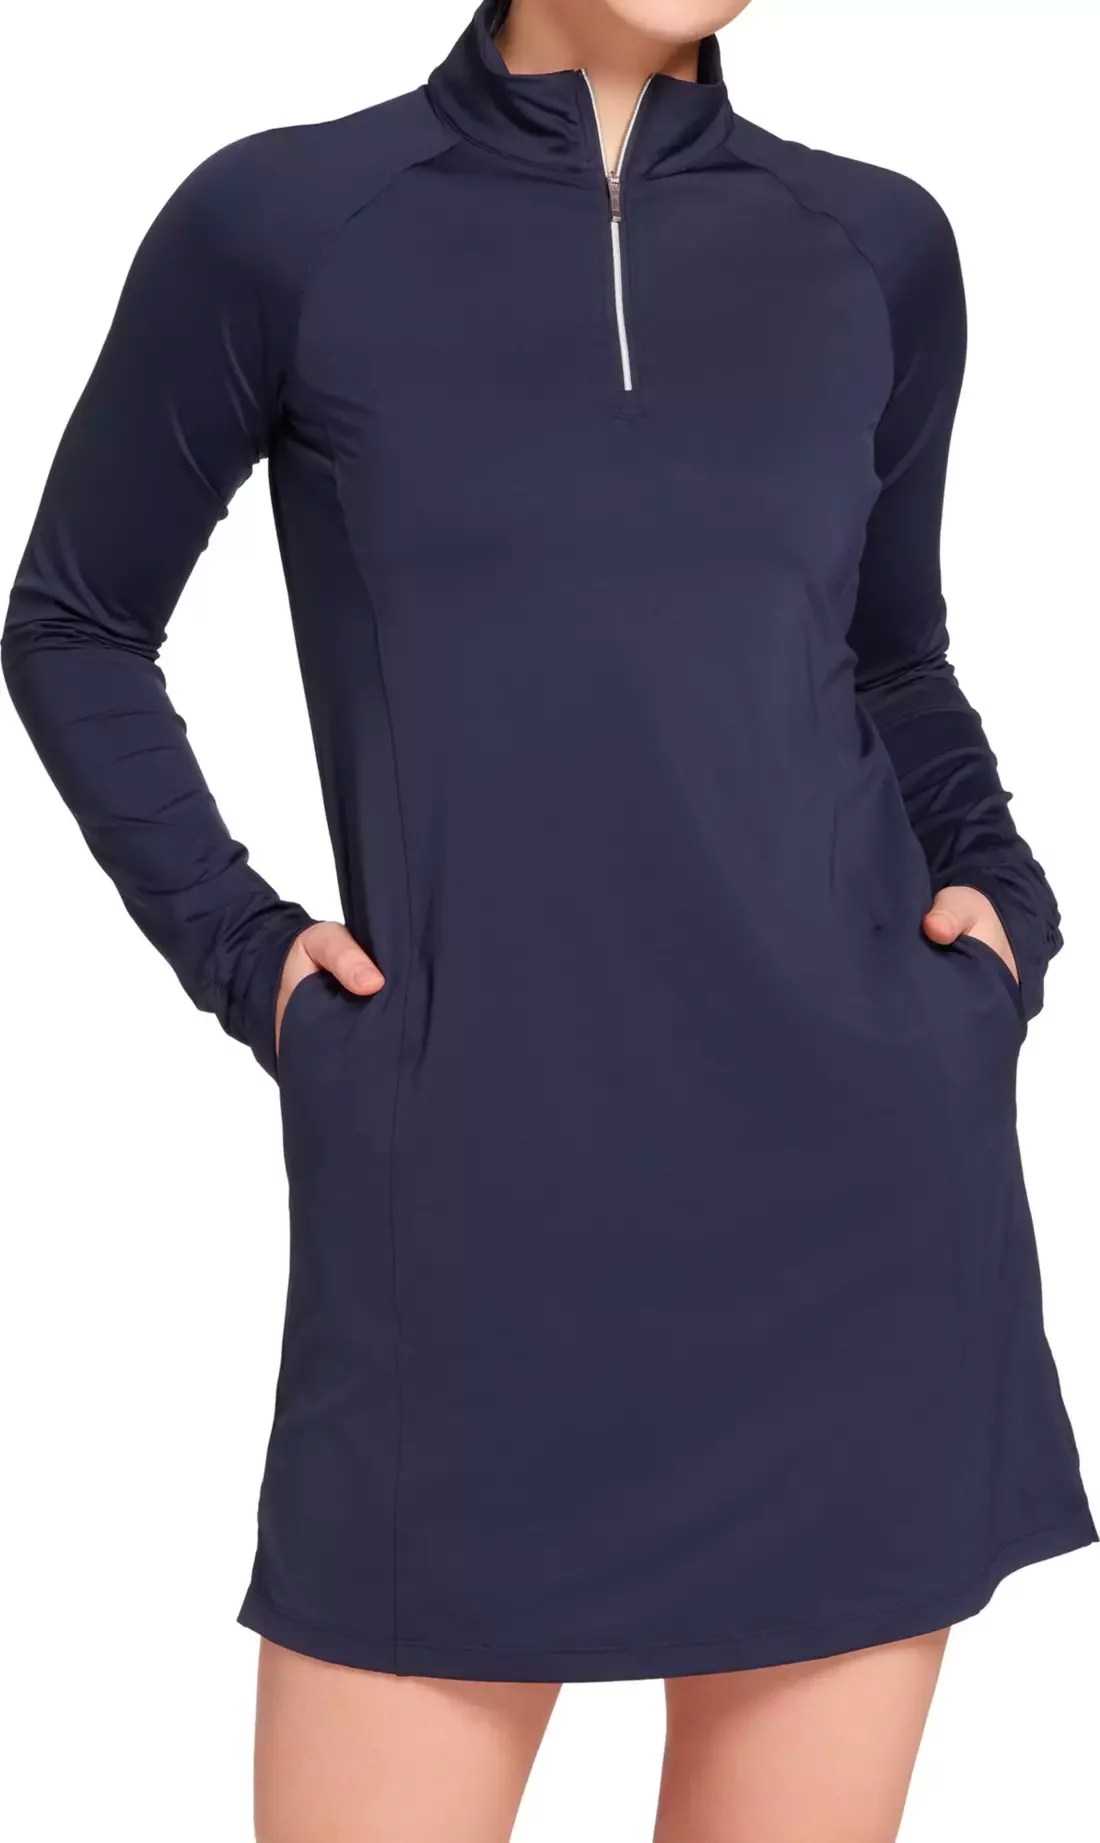 Lady Hagen Solid UV Long Sleeve Golf Dress